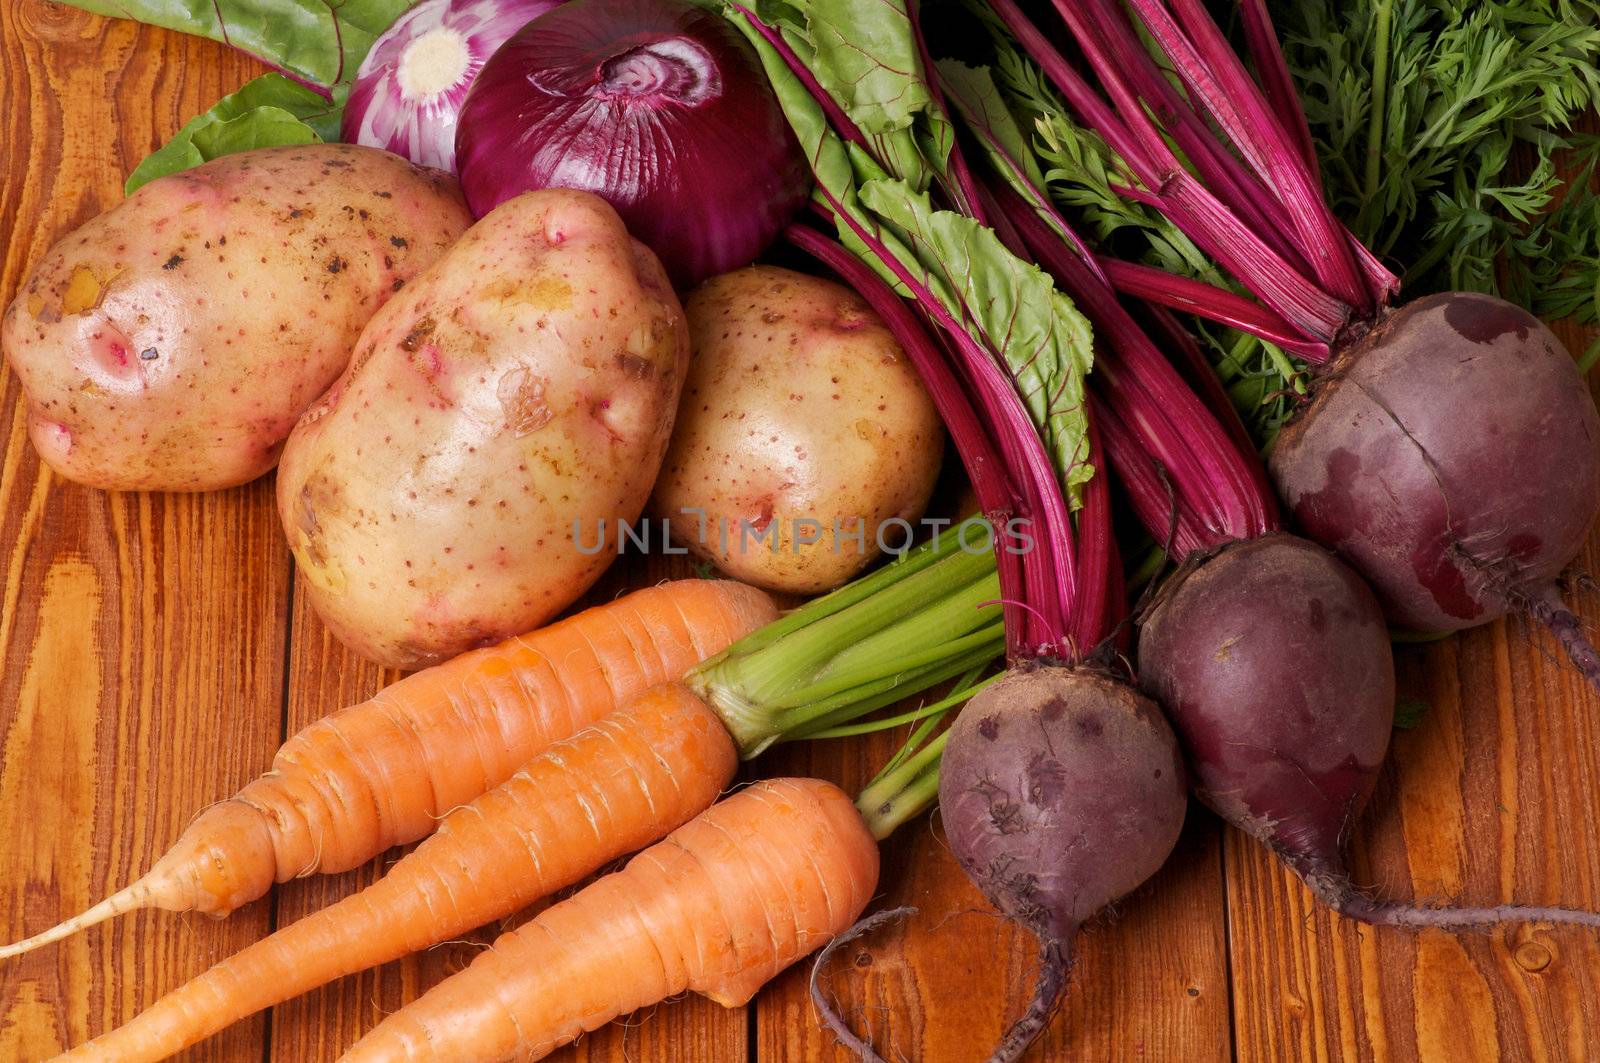 Raw Organic Vegetables by zhekos